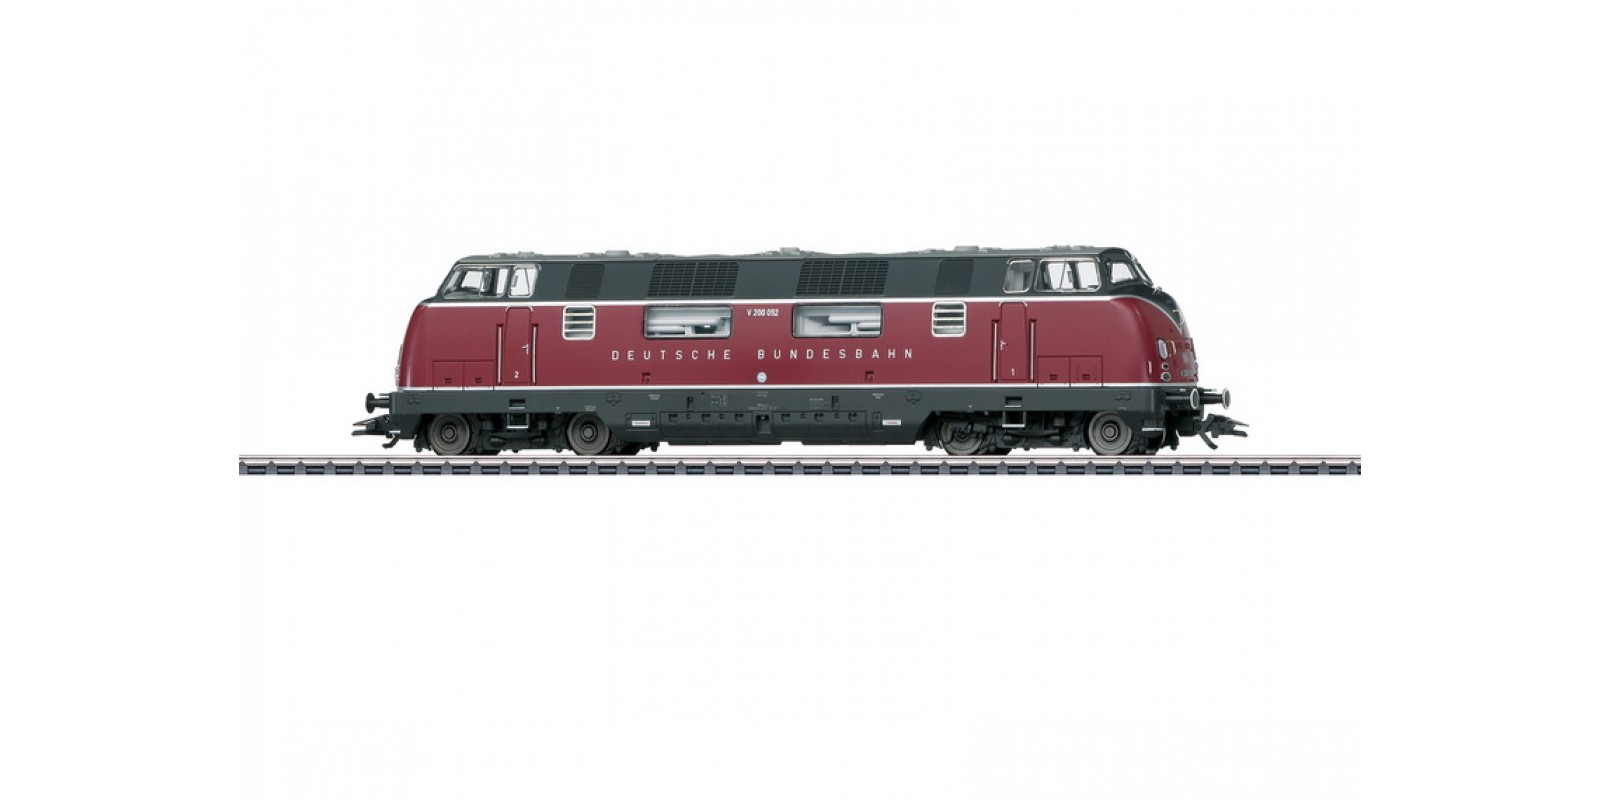 37806 Class V 200.0 Diesel Locomotive